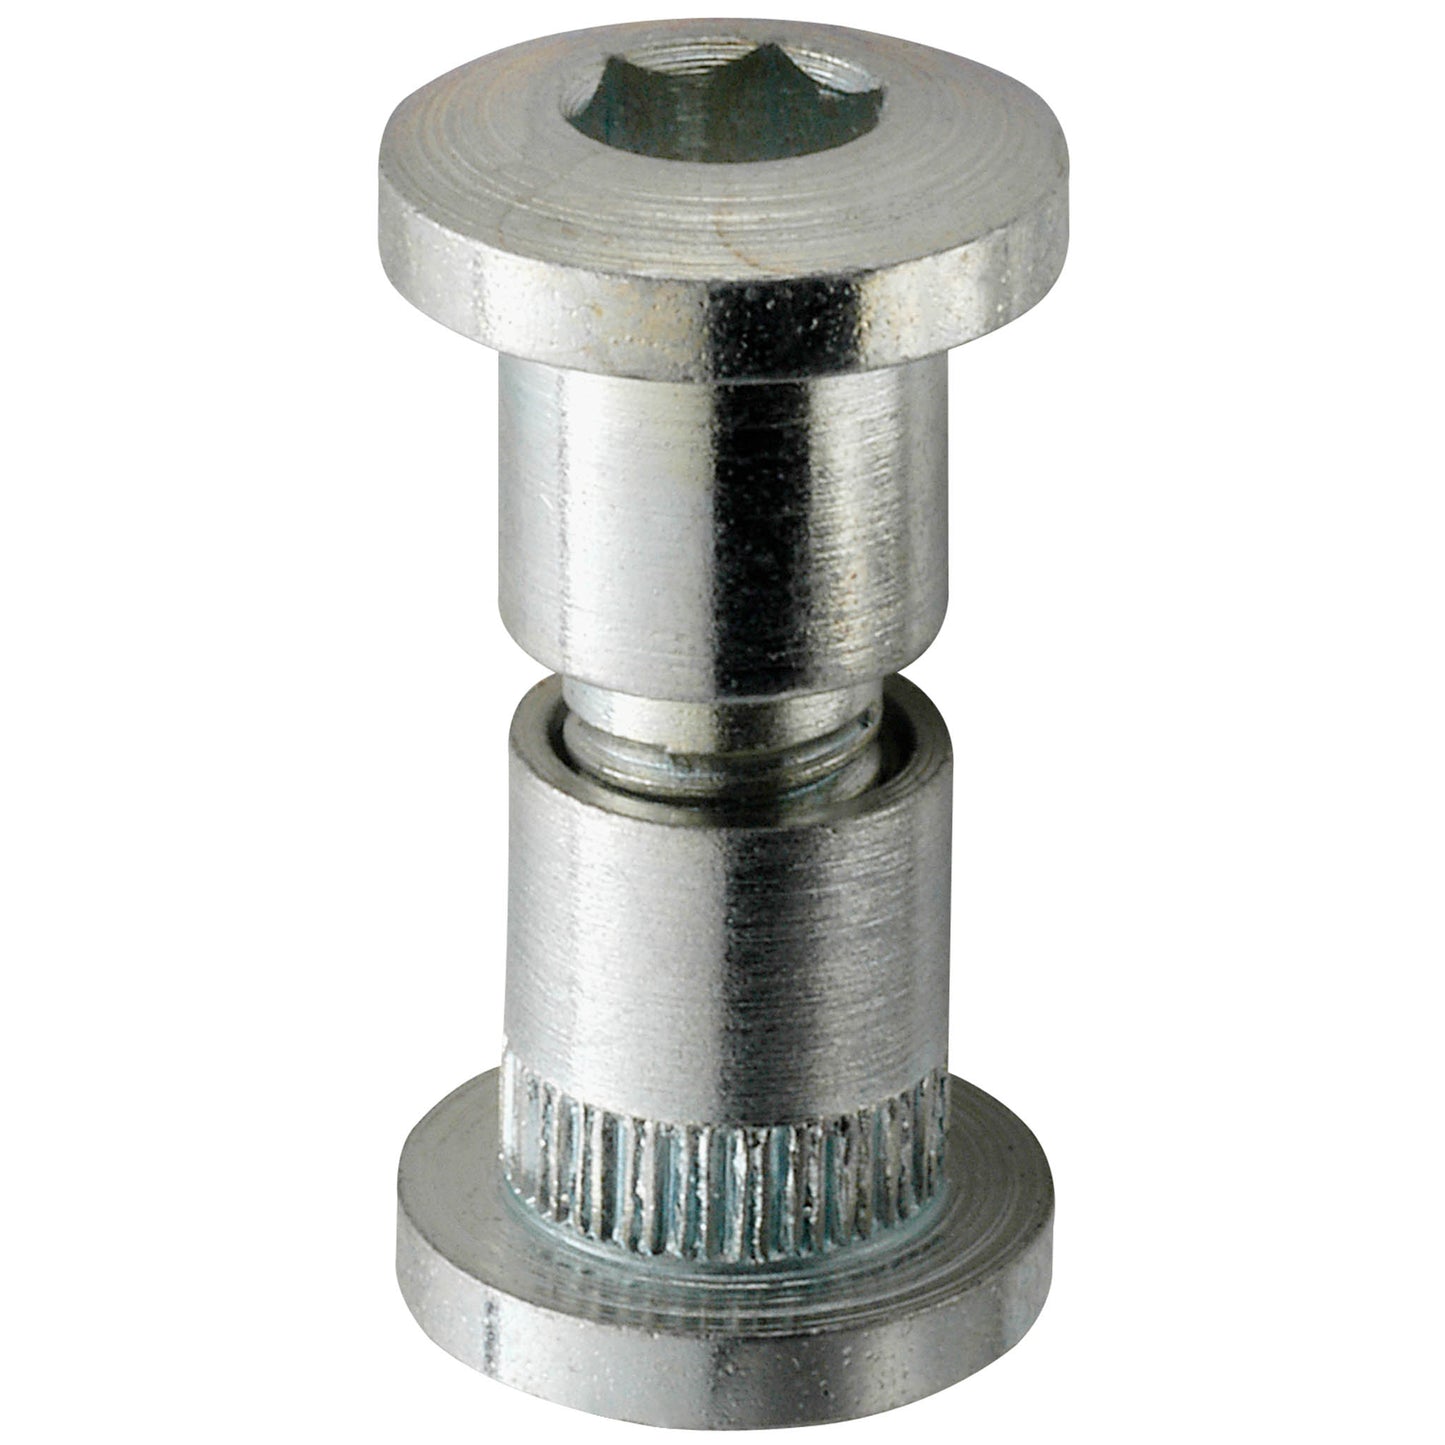 Hexagon socket clamping bolt M 6 x 25 mm, galvanized steel